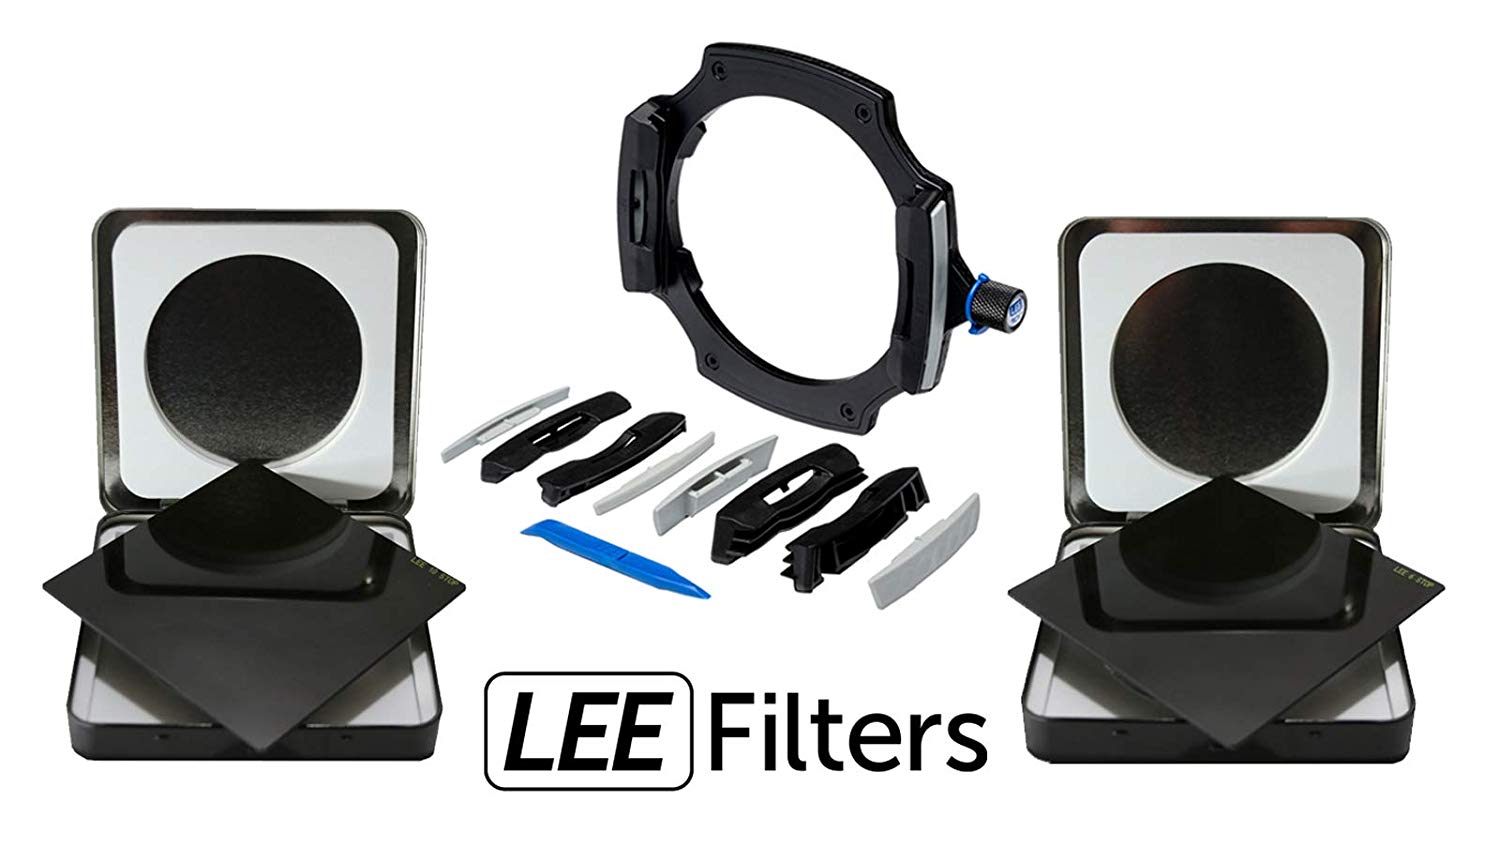 Lee Filters LEE100 Filter Kits